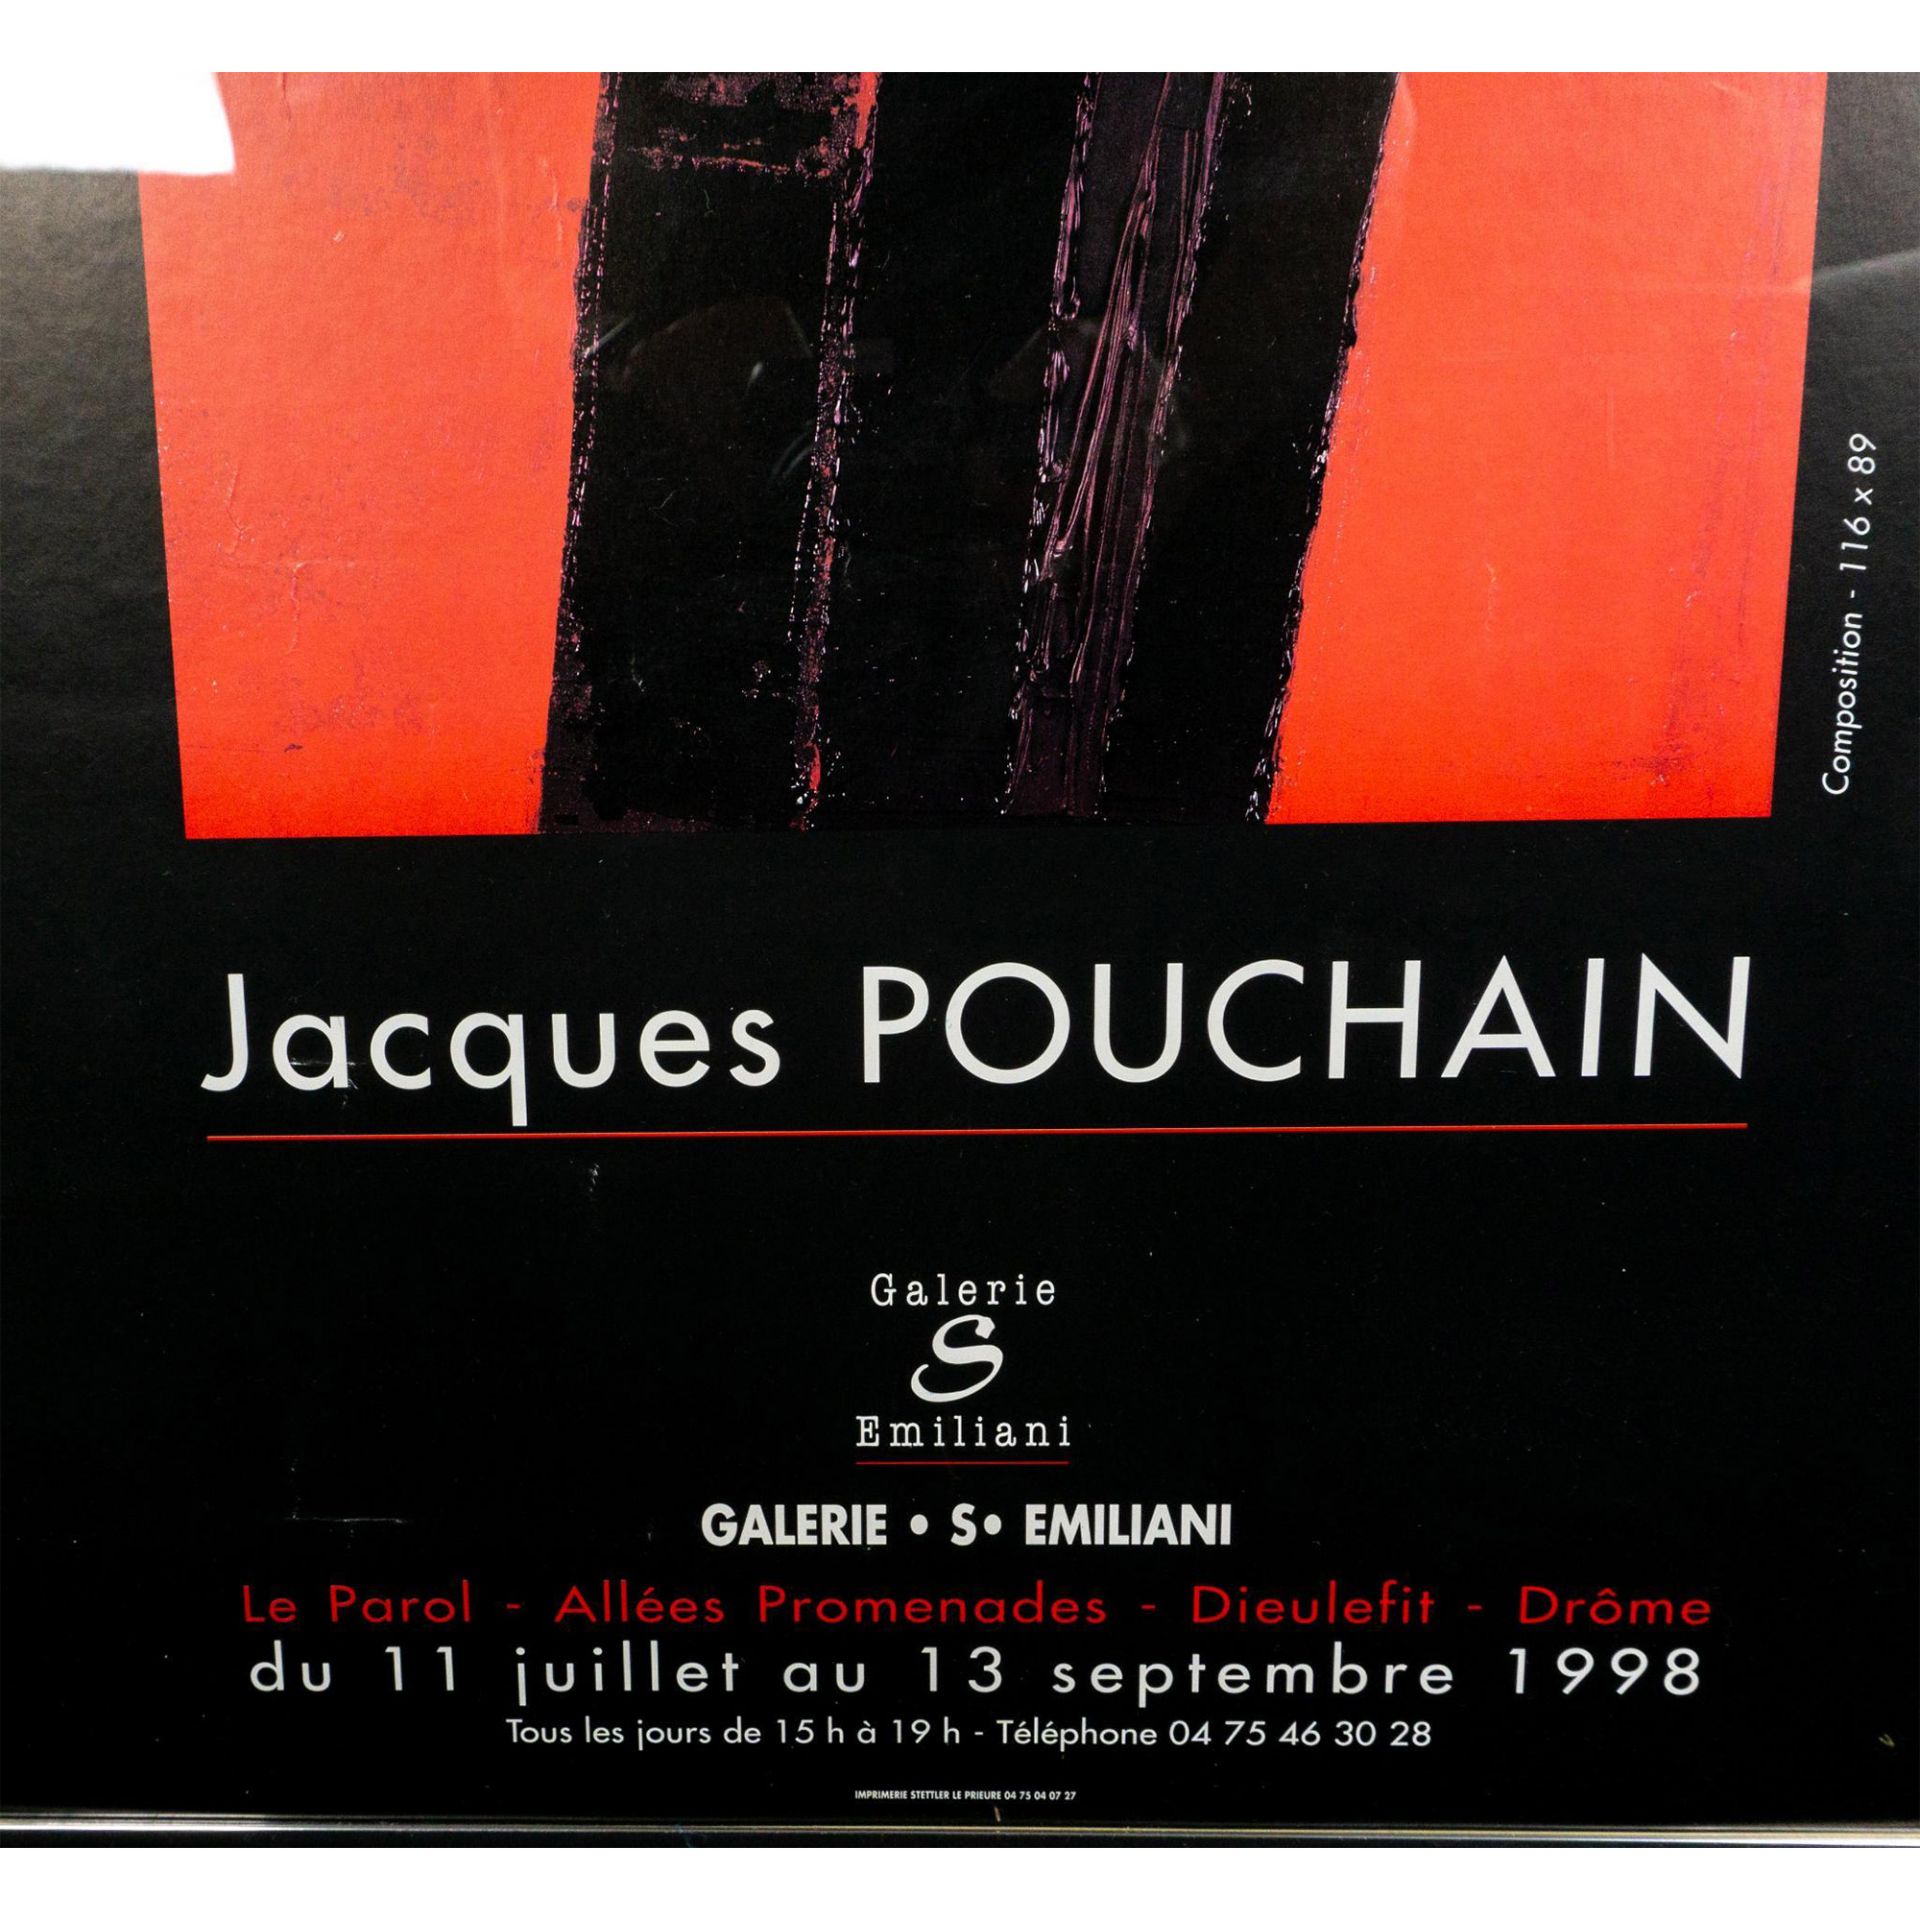 Jacques Pouchain, Exhibition Poster Galerie Emiliani - Image 3 of 4